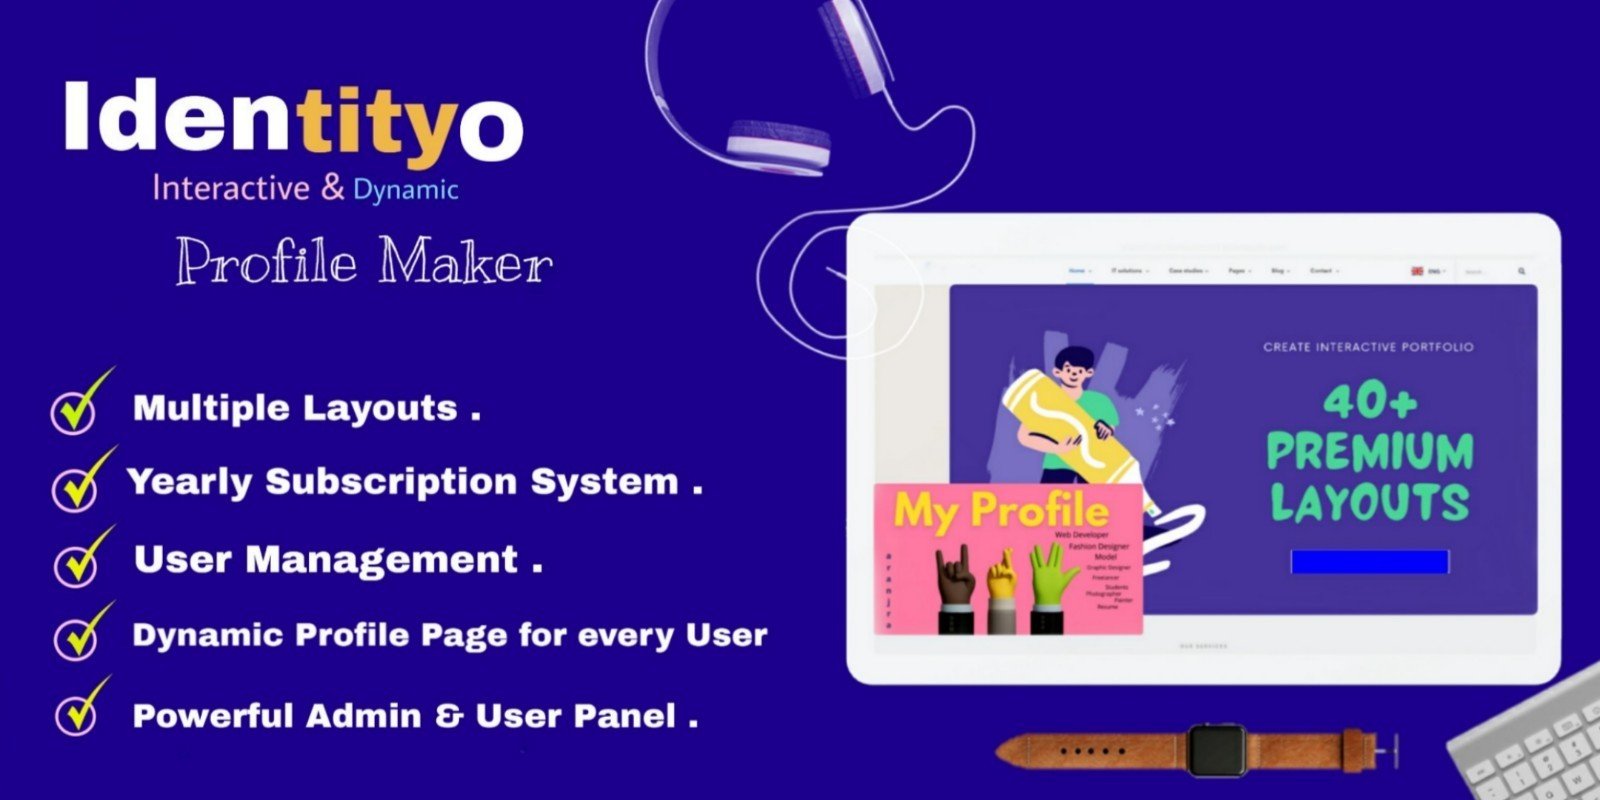 Identityo - Interactive and Dynamic Profile Maker